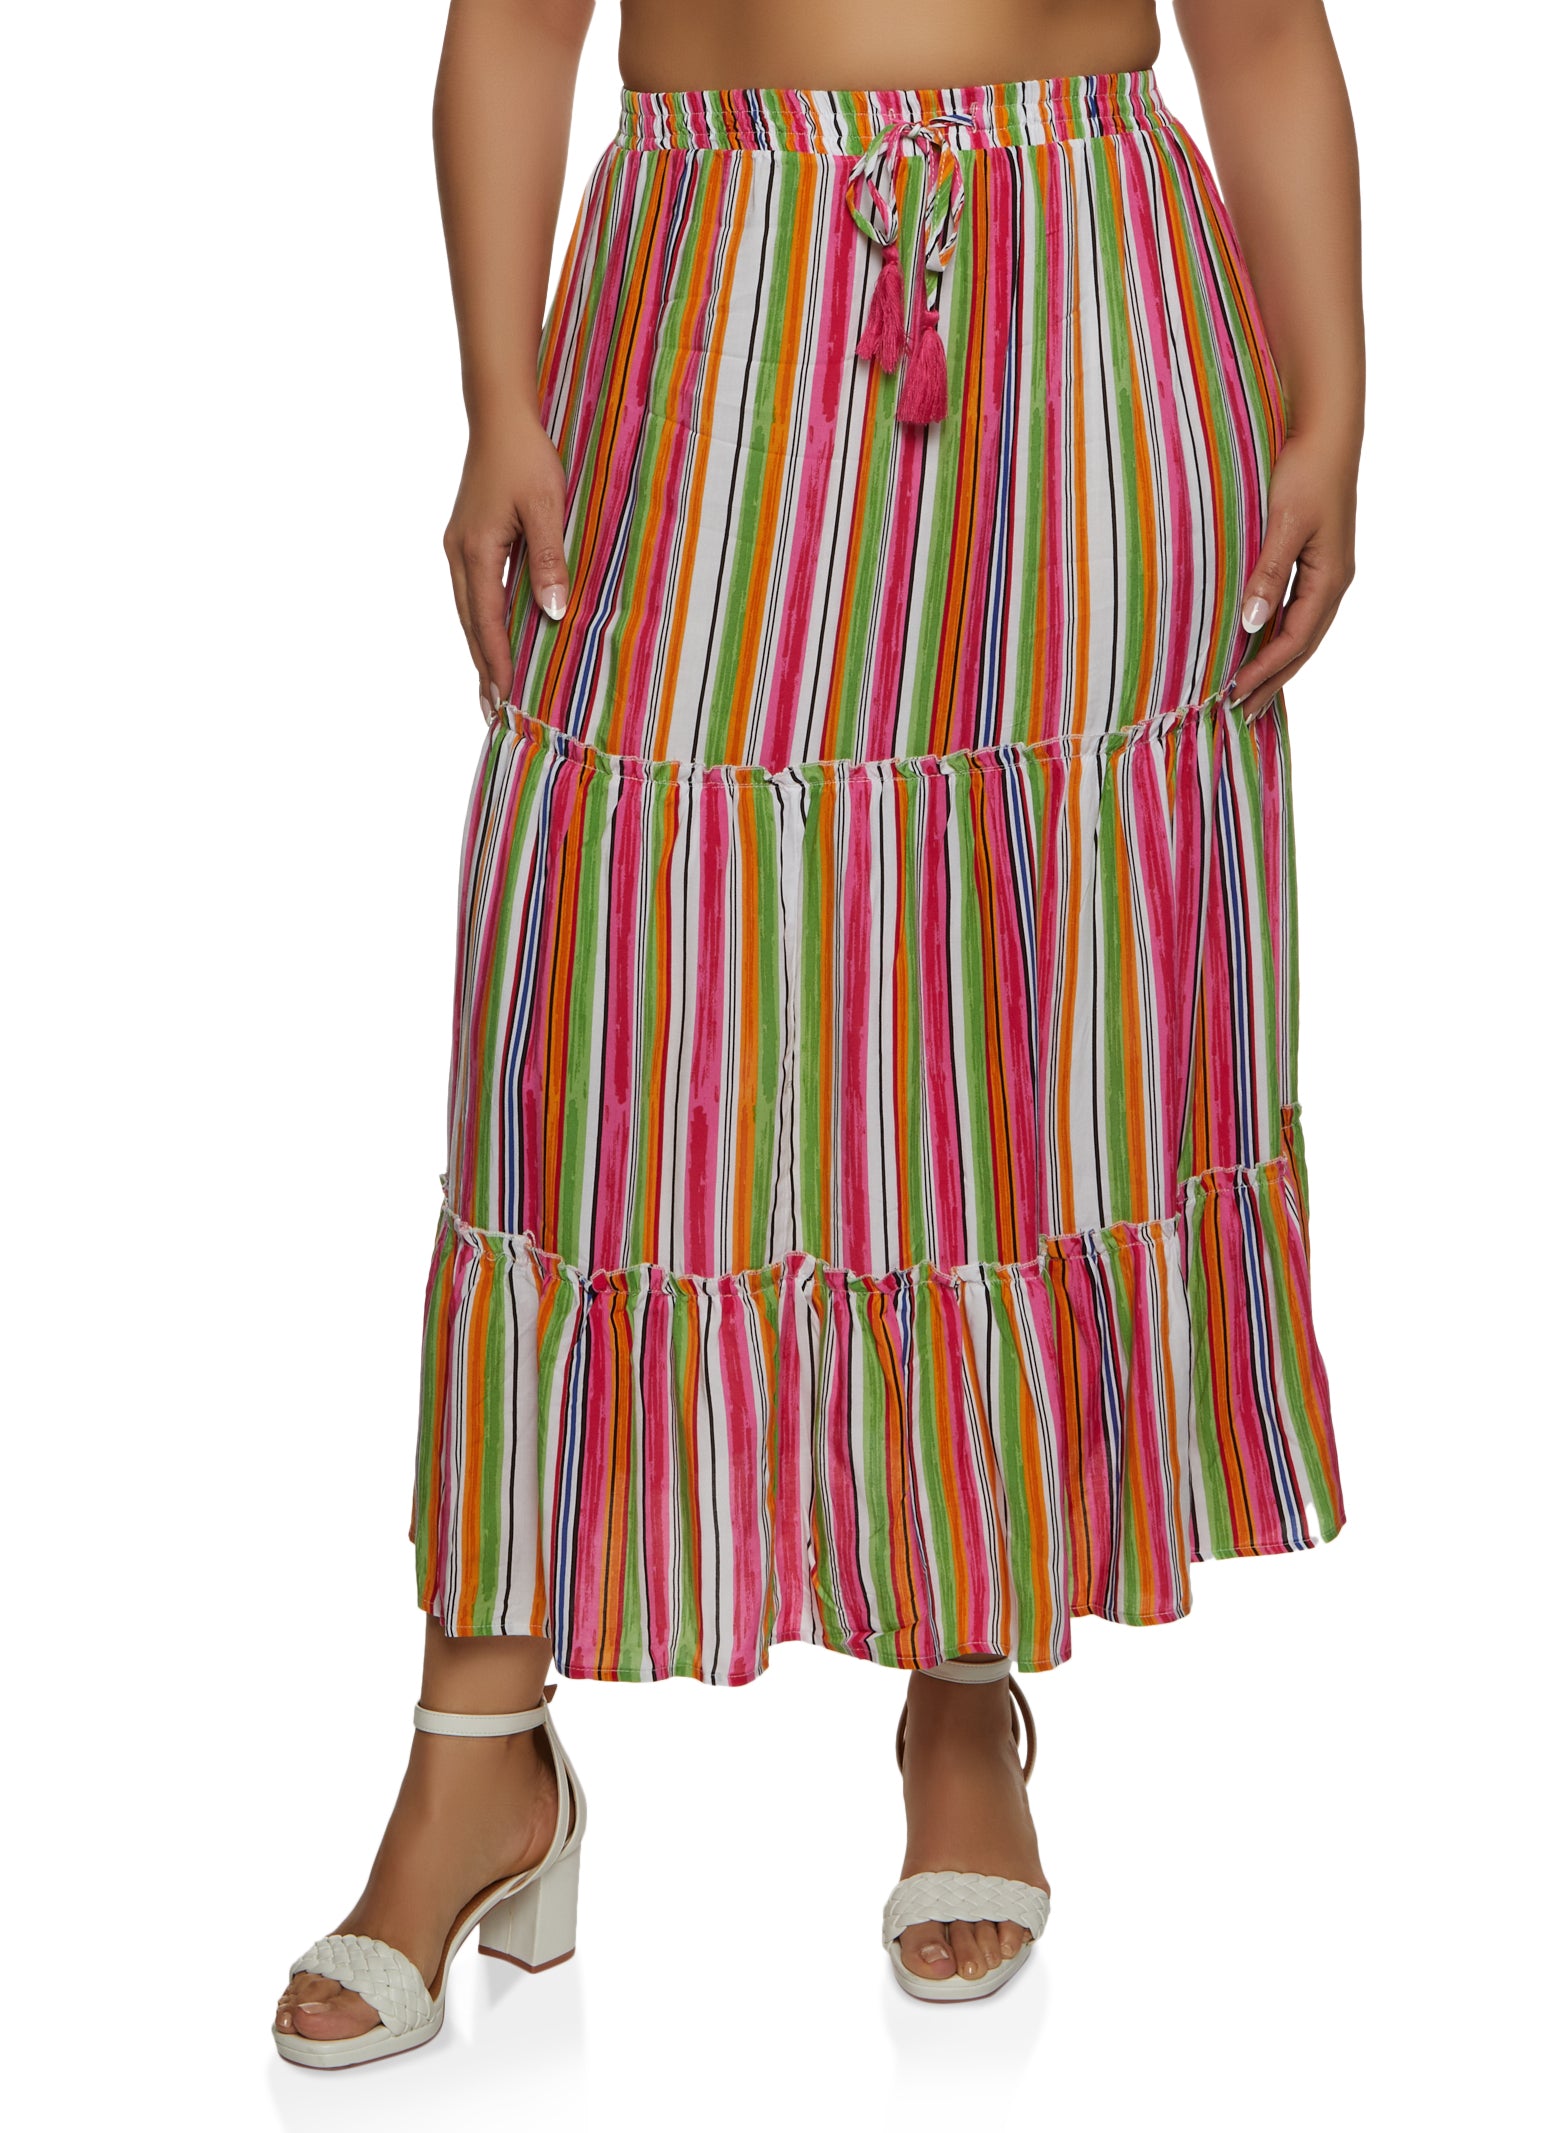 dRA Maya Skirt in Rainbow Stripe - All Bottoms | Red Dress